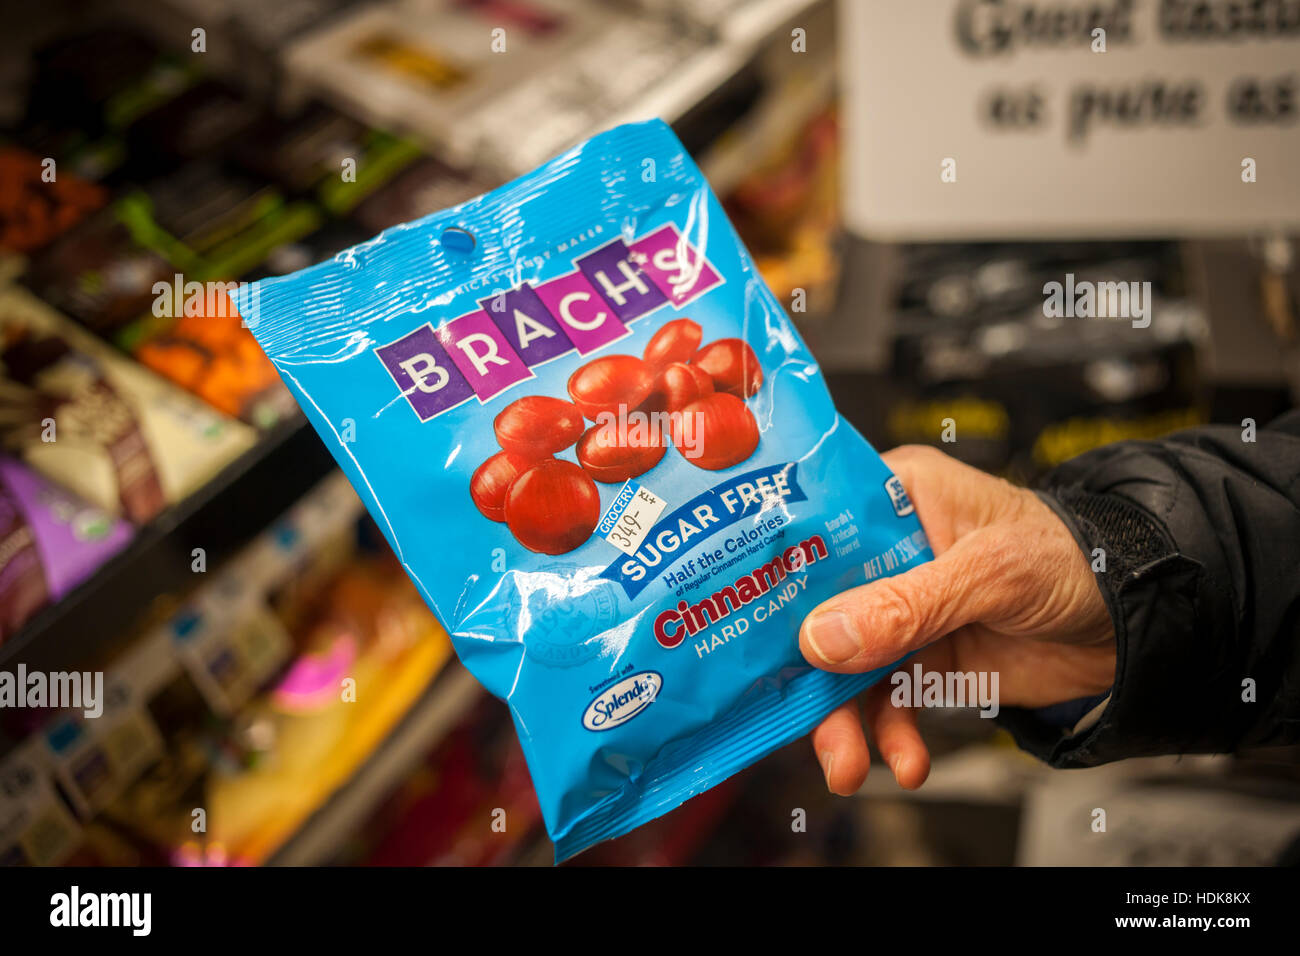 A shopper chooses a bag of Ferrrara Candy Co.'s Brach's hard candy